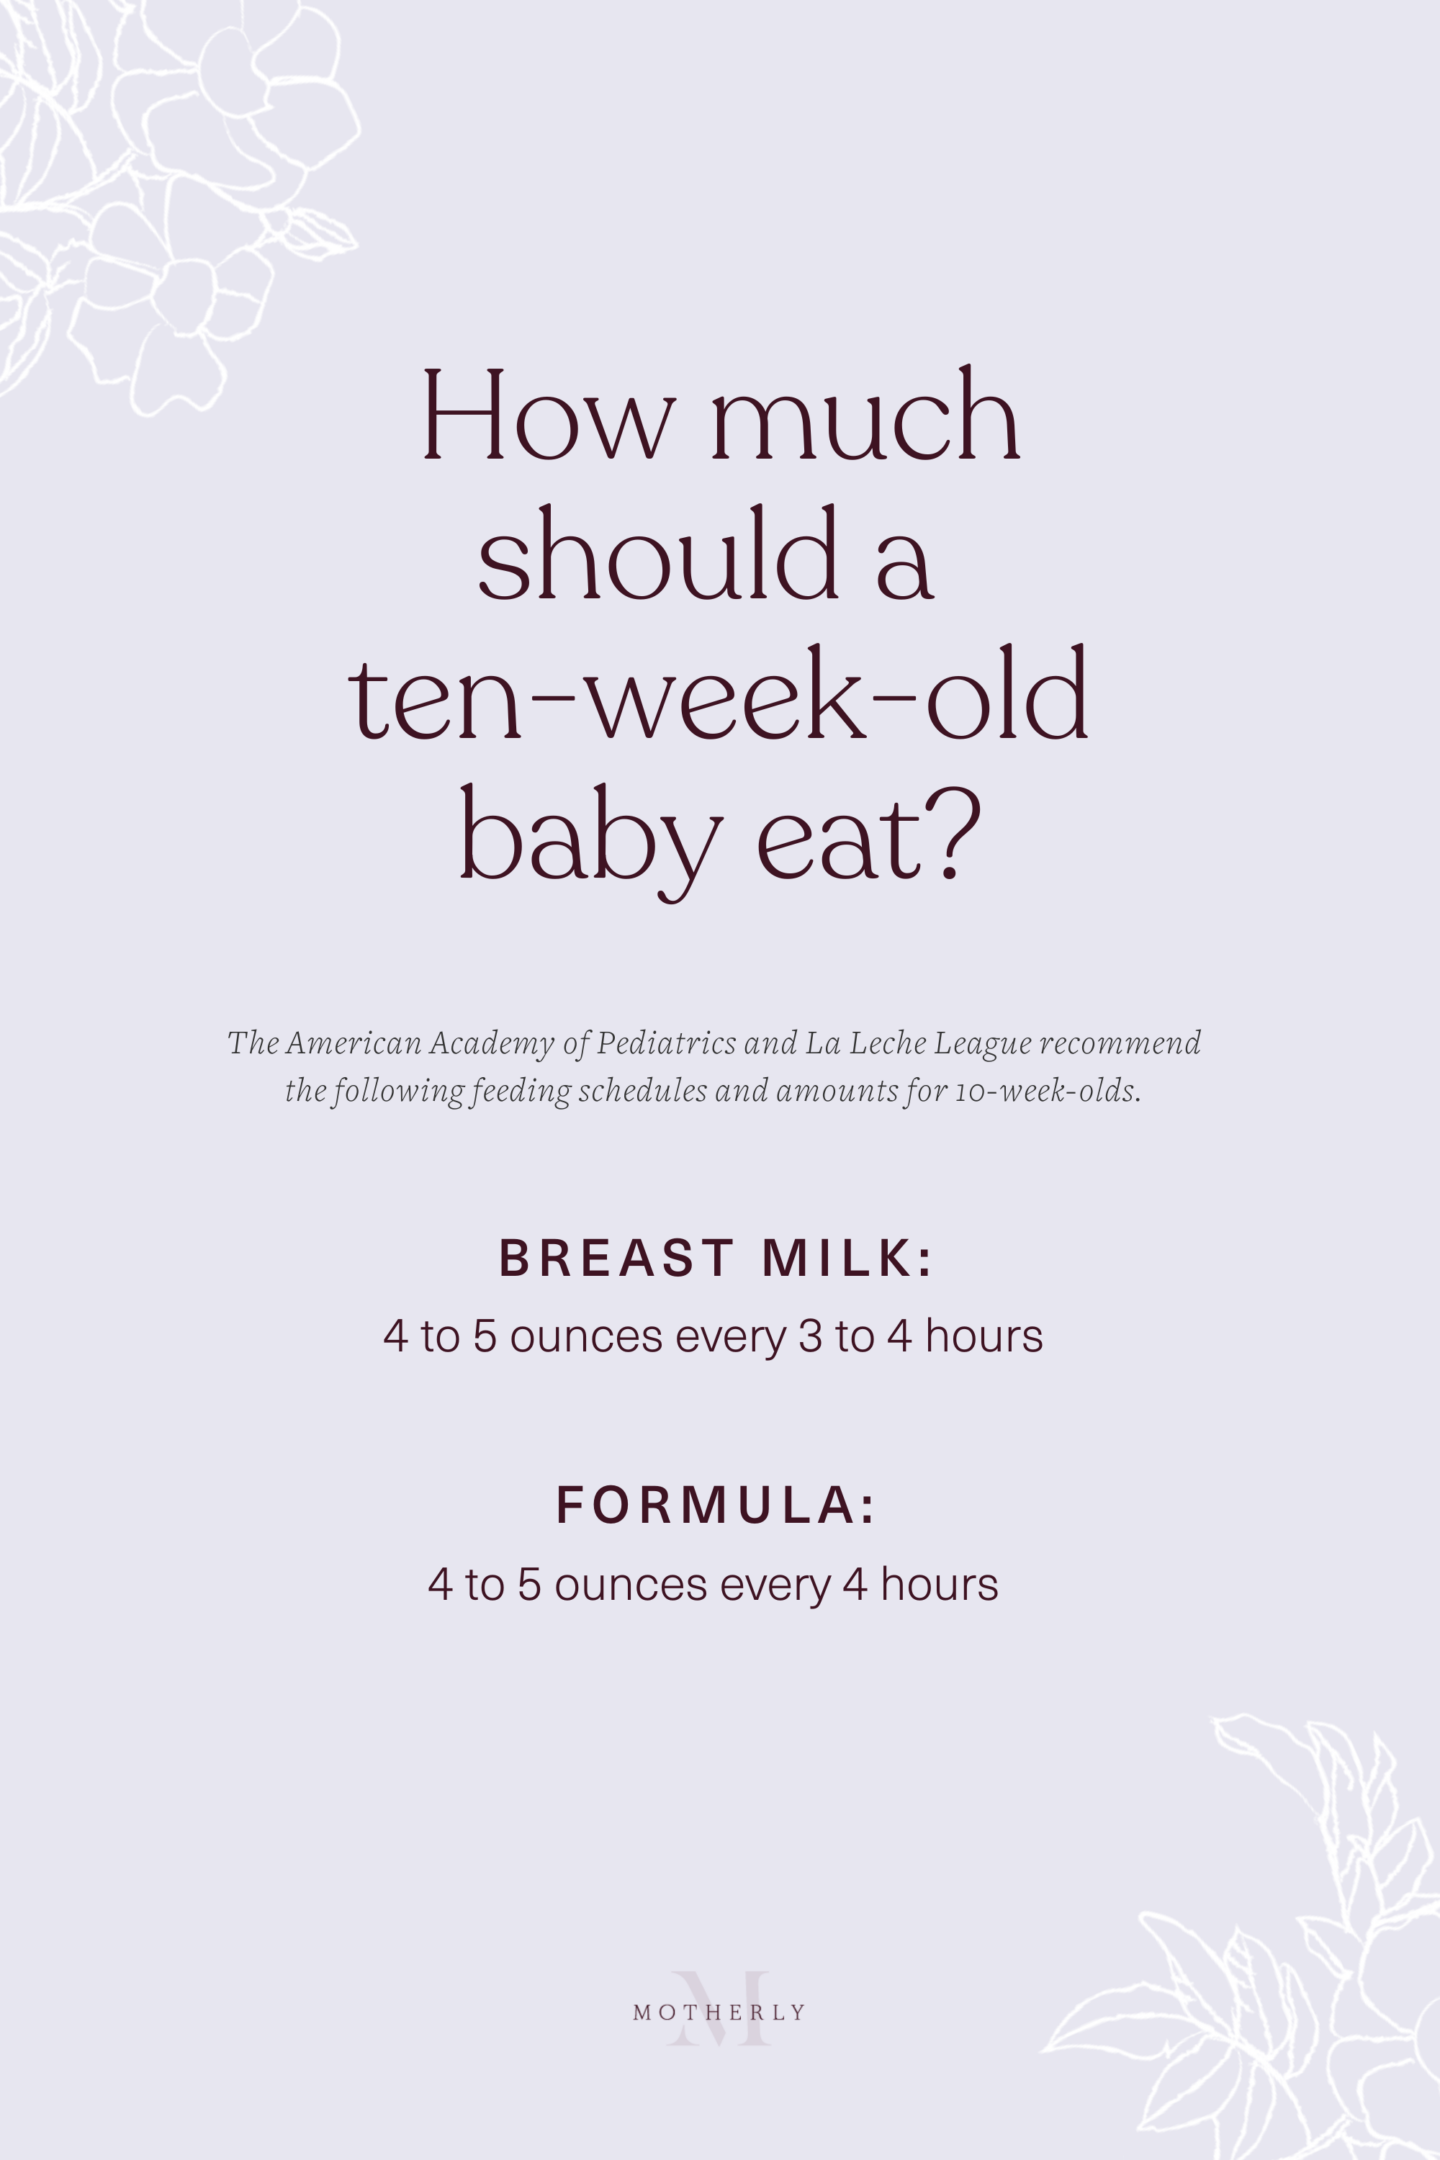 printable summary of 10-week-old baby feeding schedule - breast milk and formula